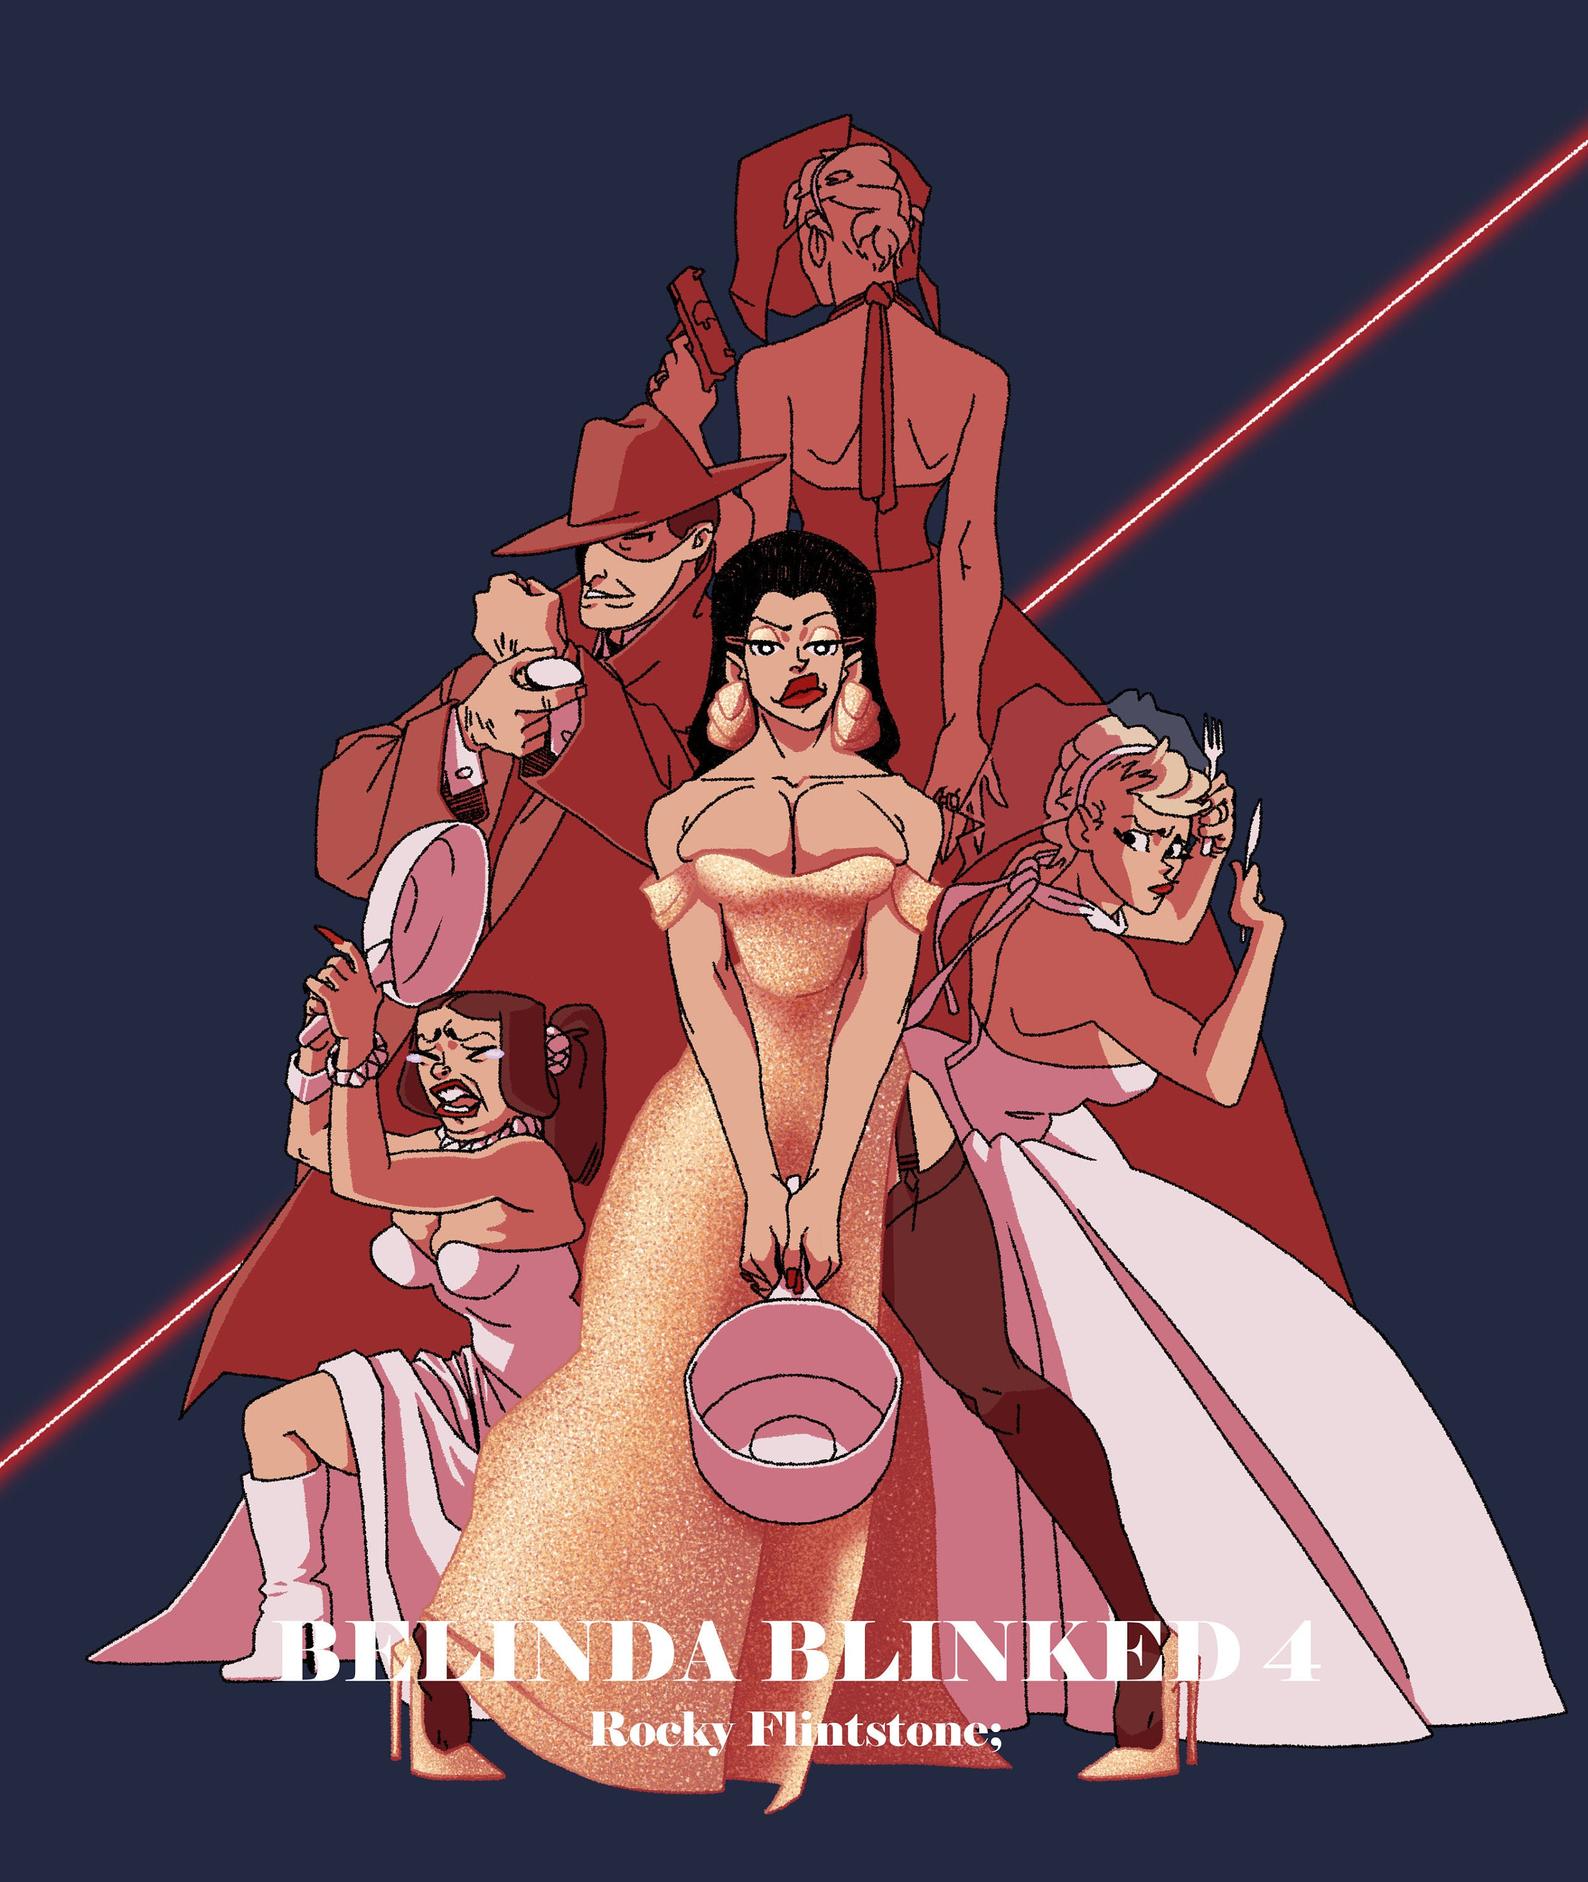 Belinda Blinked 4 paperback book